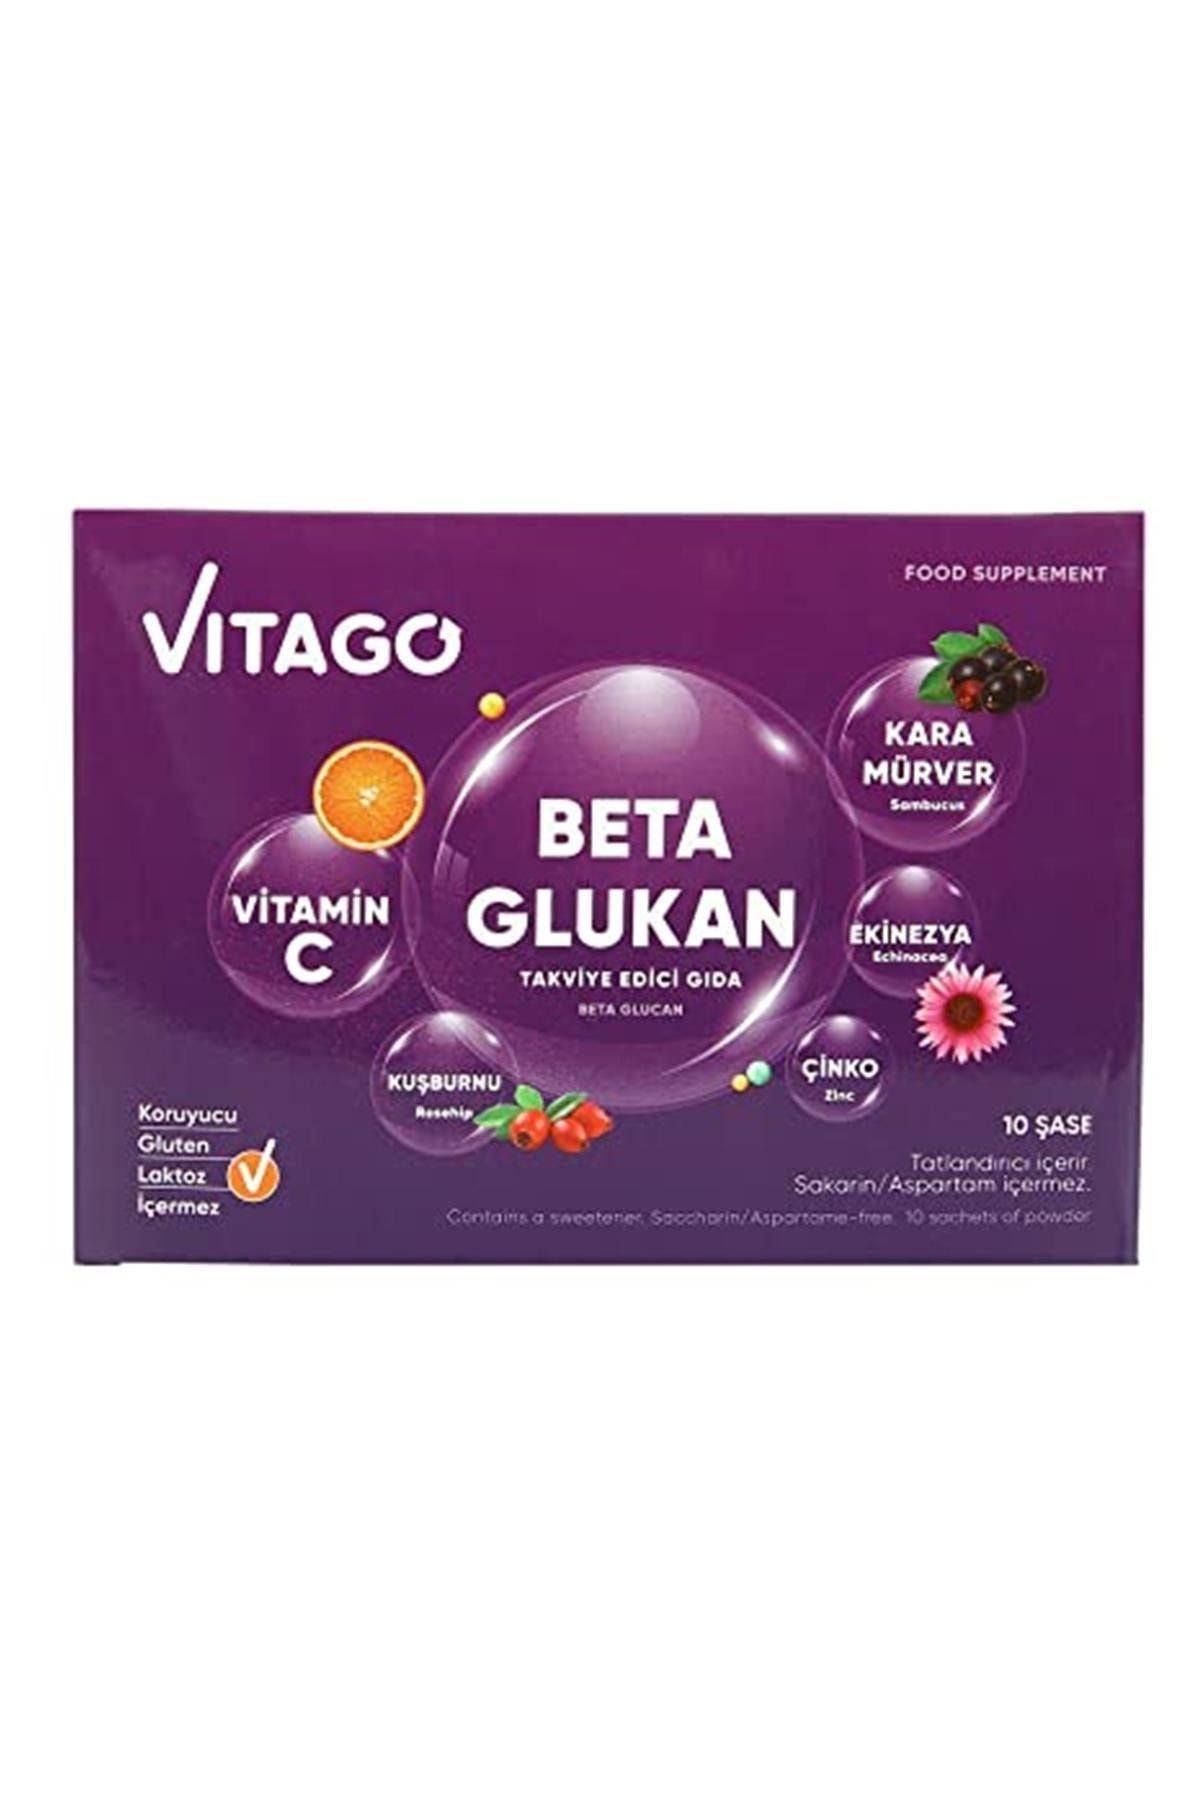 Vitago Beta Glukan, Karamürver, C Vitamini Içeren Efervesan Saşe